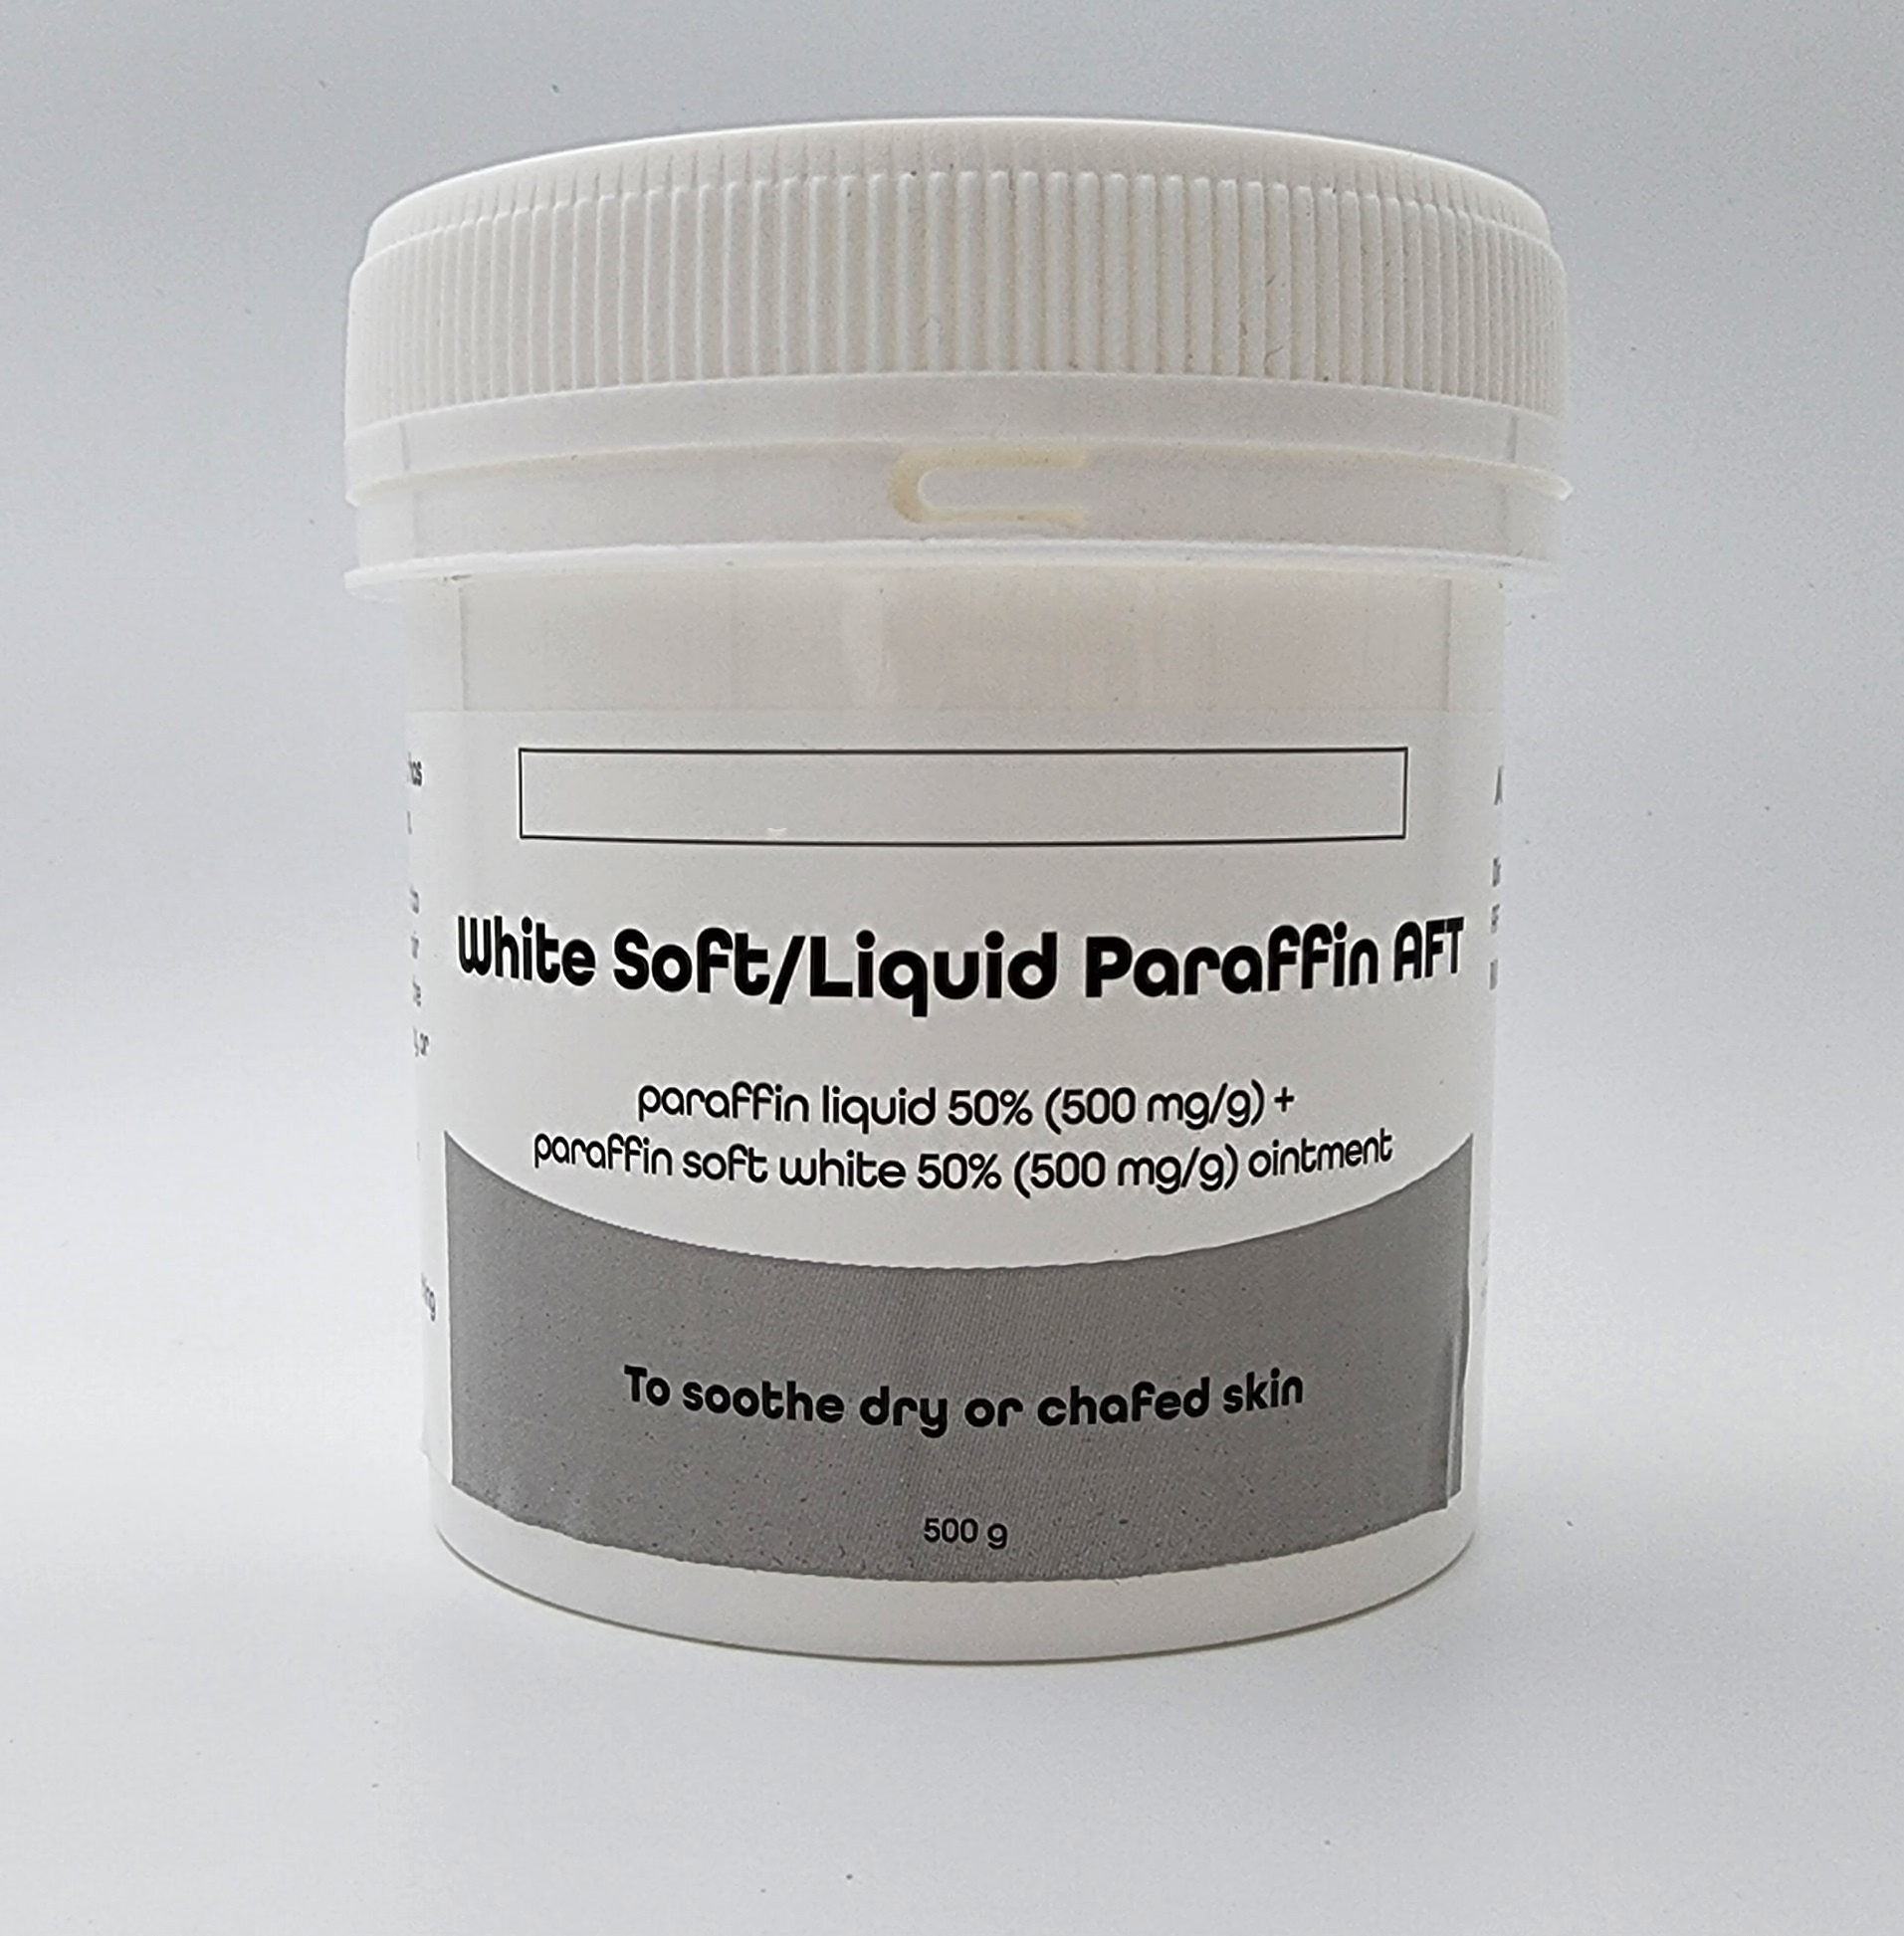 White Soft Liquid Paraffin AFT 500g Tub image 0